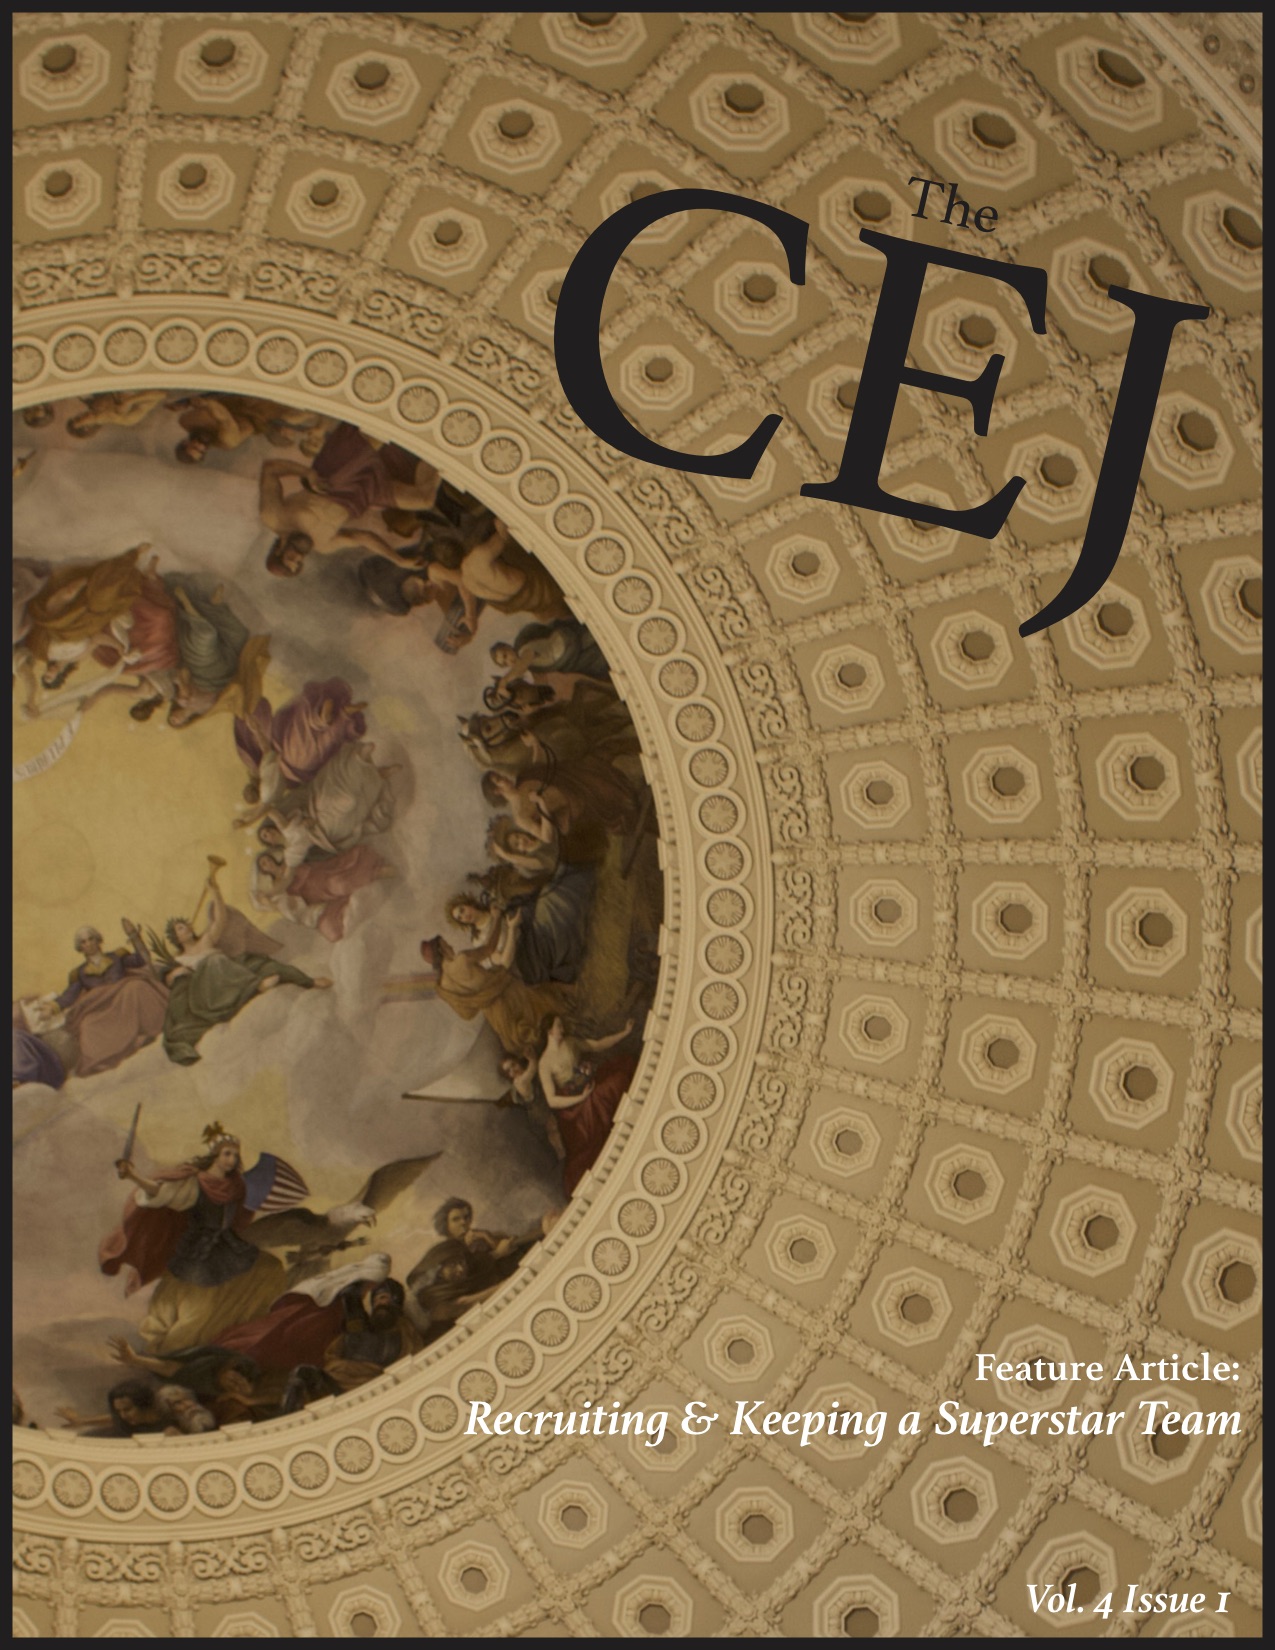 The CEJ (Vol 4 issue 1)